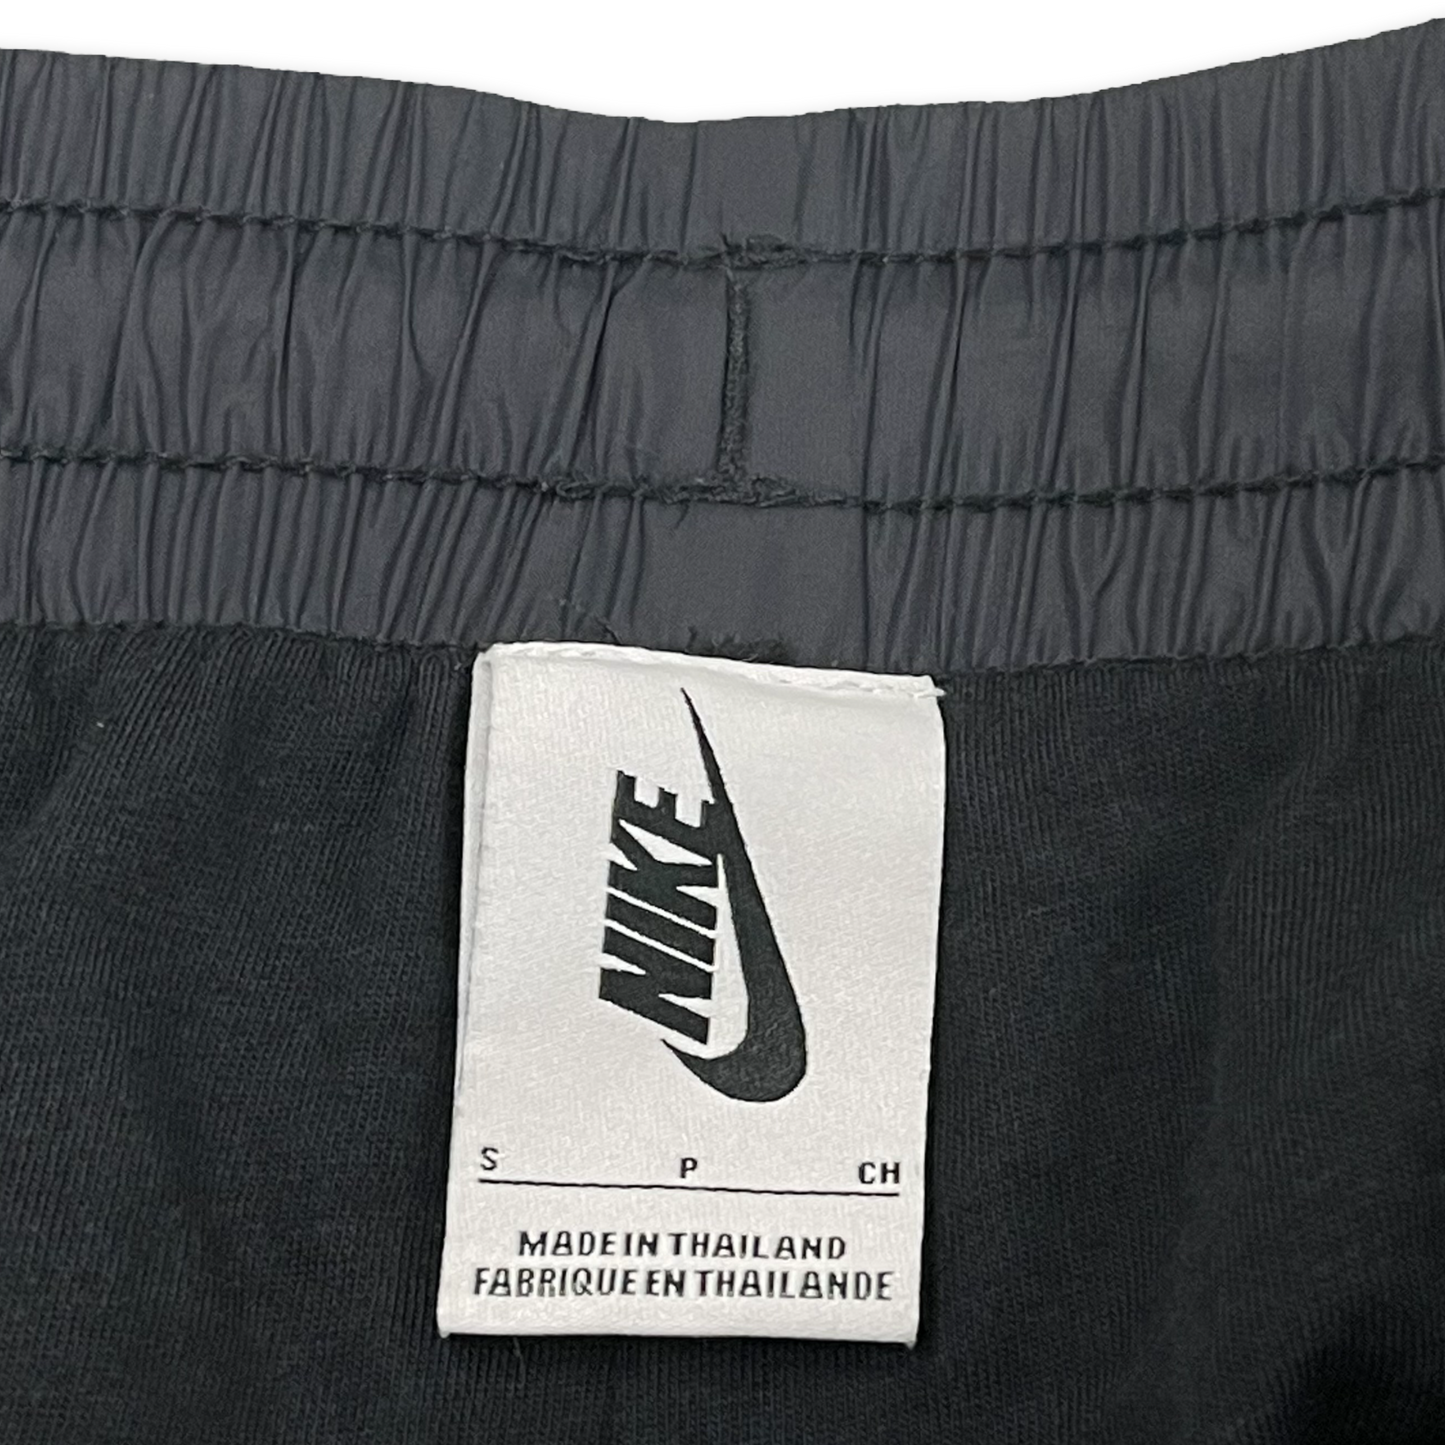 Nike x Fear of God Tear Away Pants